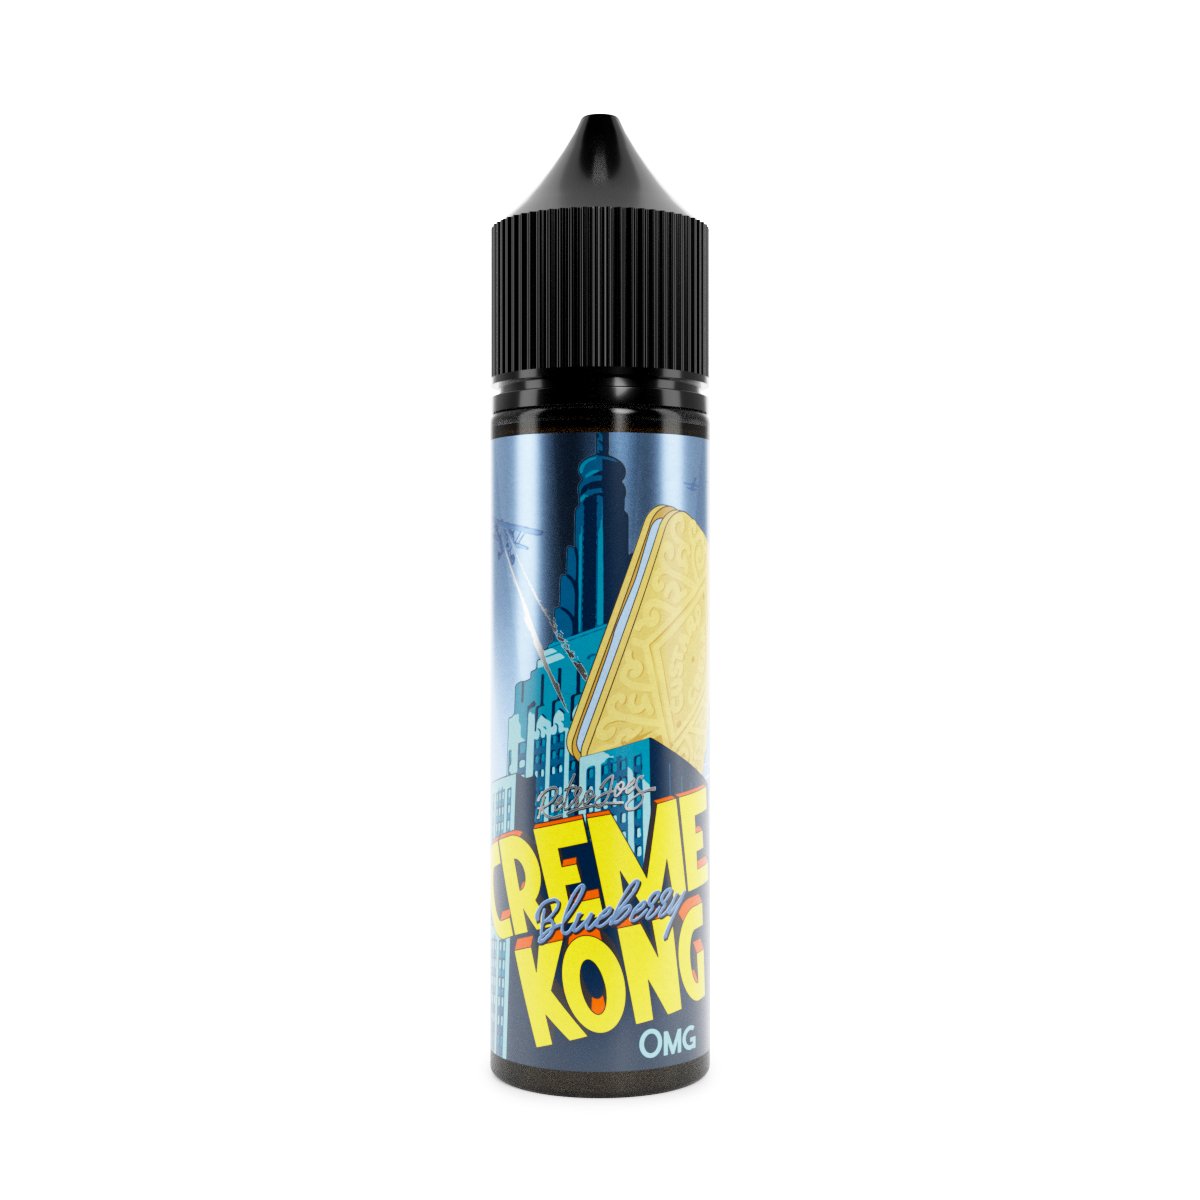 Retro Joes Creme Kong Blueberry 0mg 50ml Shortfill E-Liquid